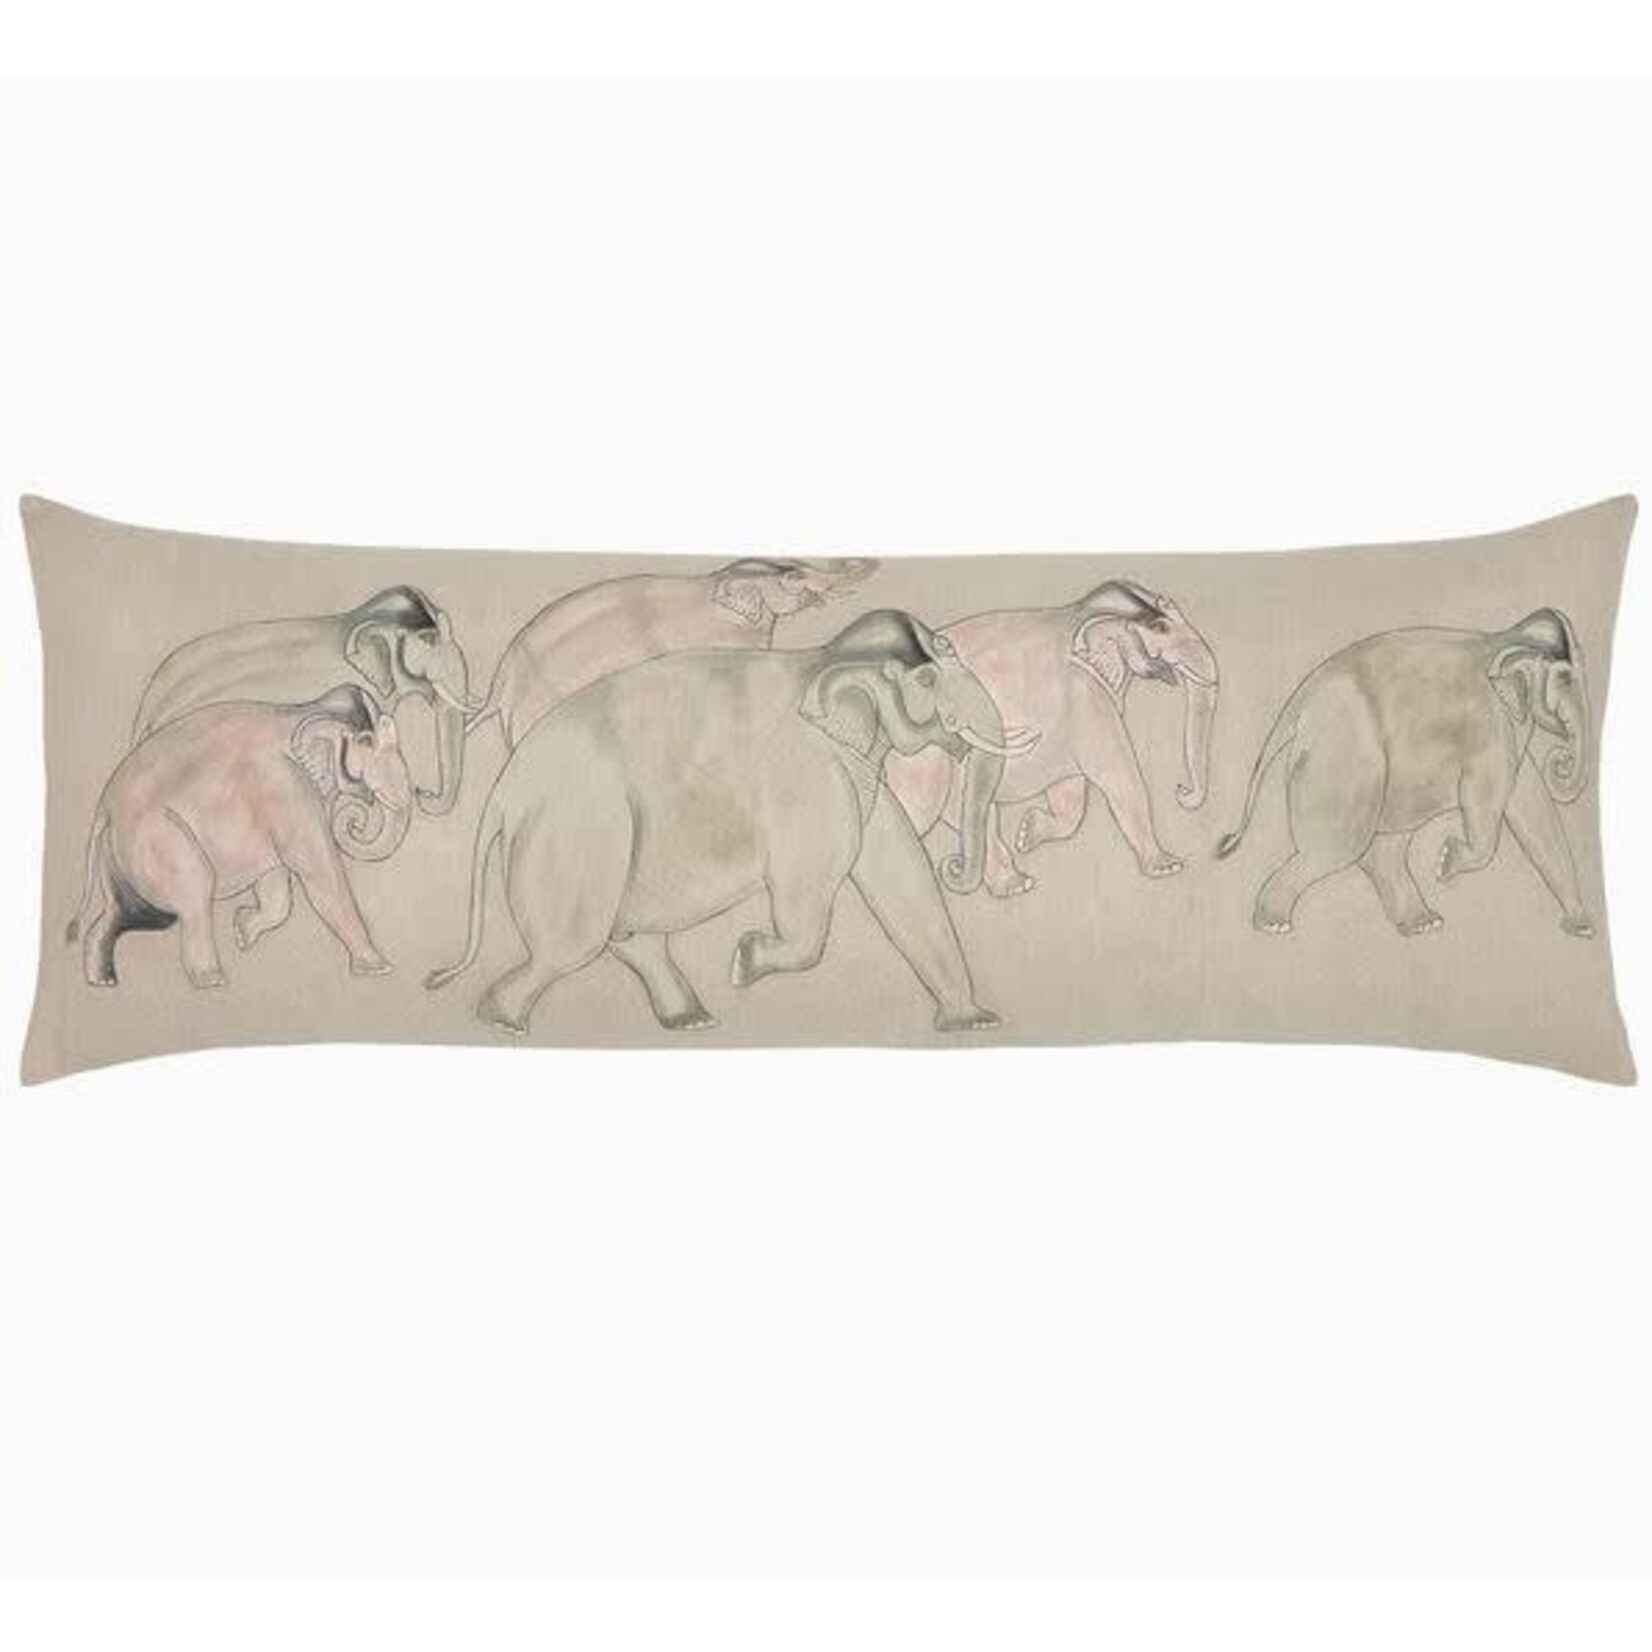 John Robshaw Textiles Elephants En Route Lumbar Pillow with Insert 14x40